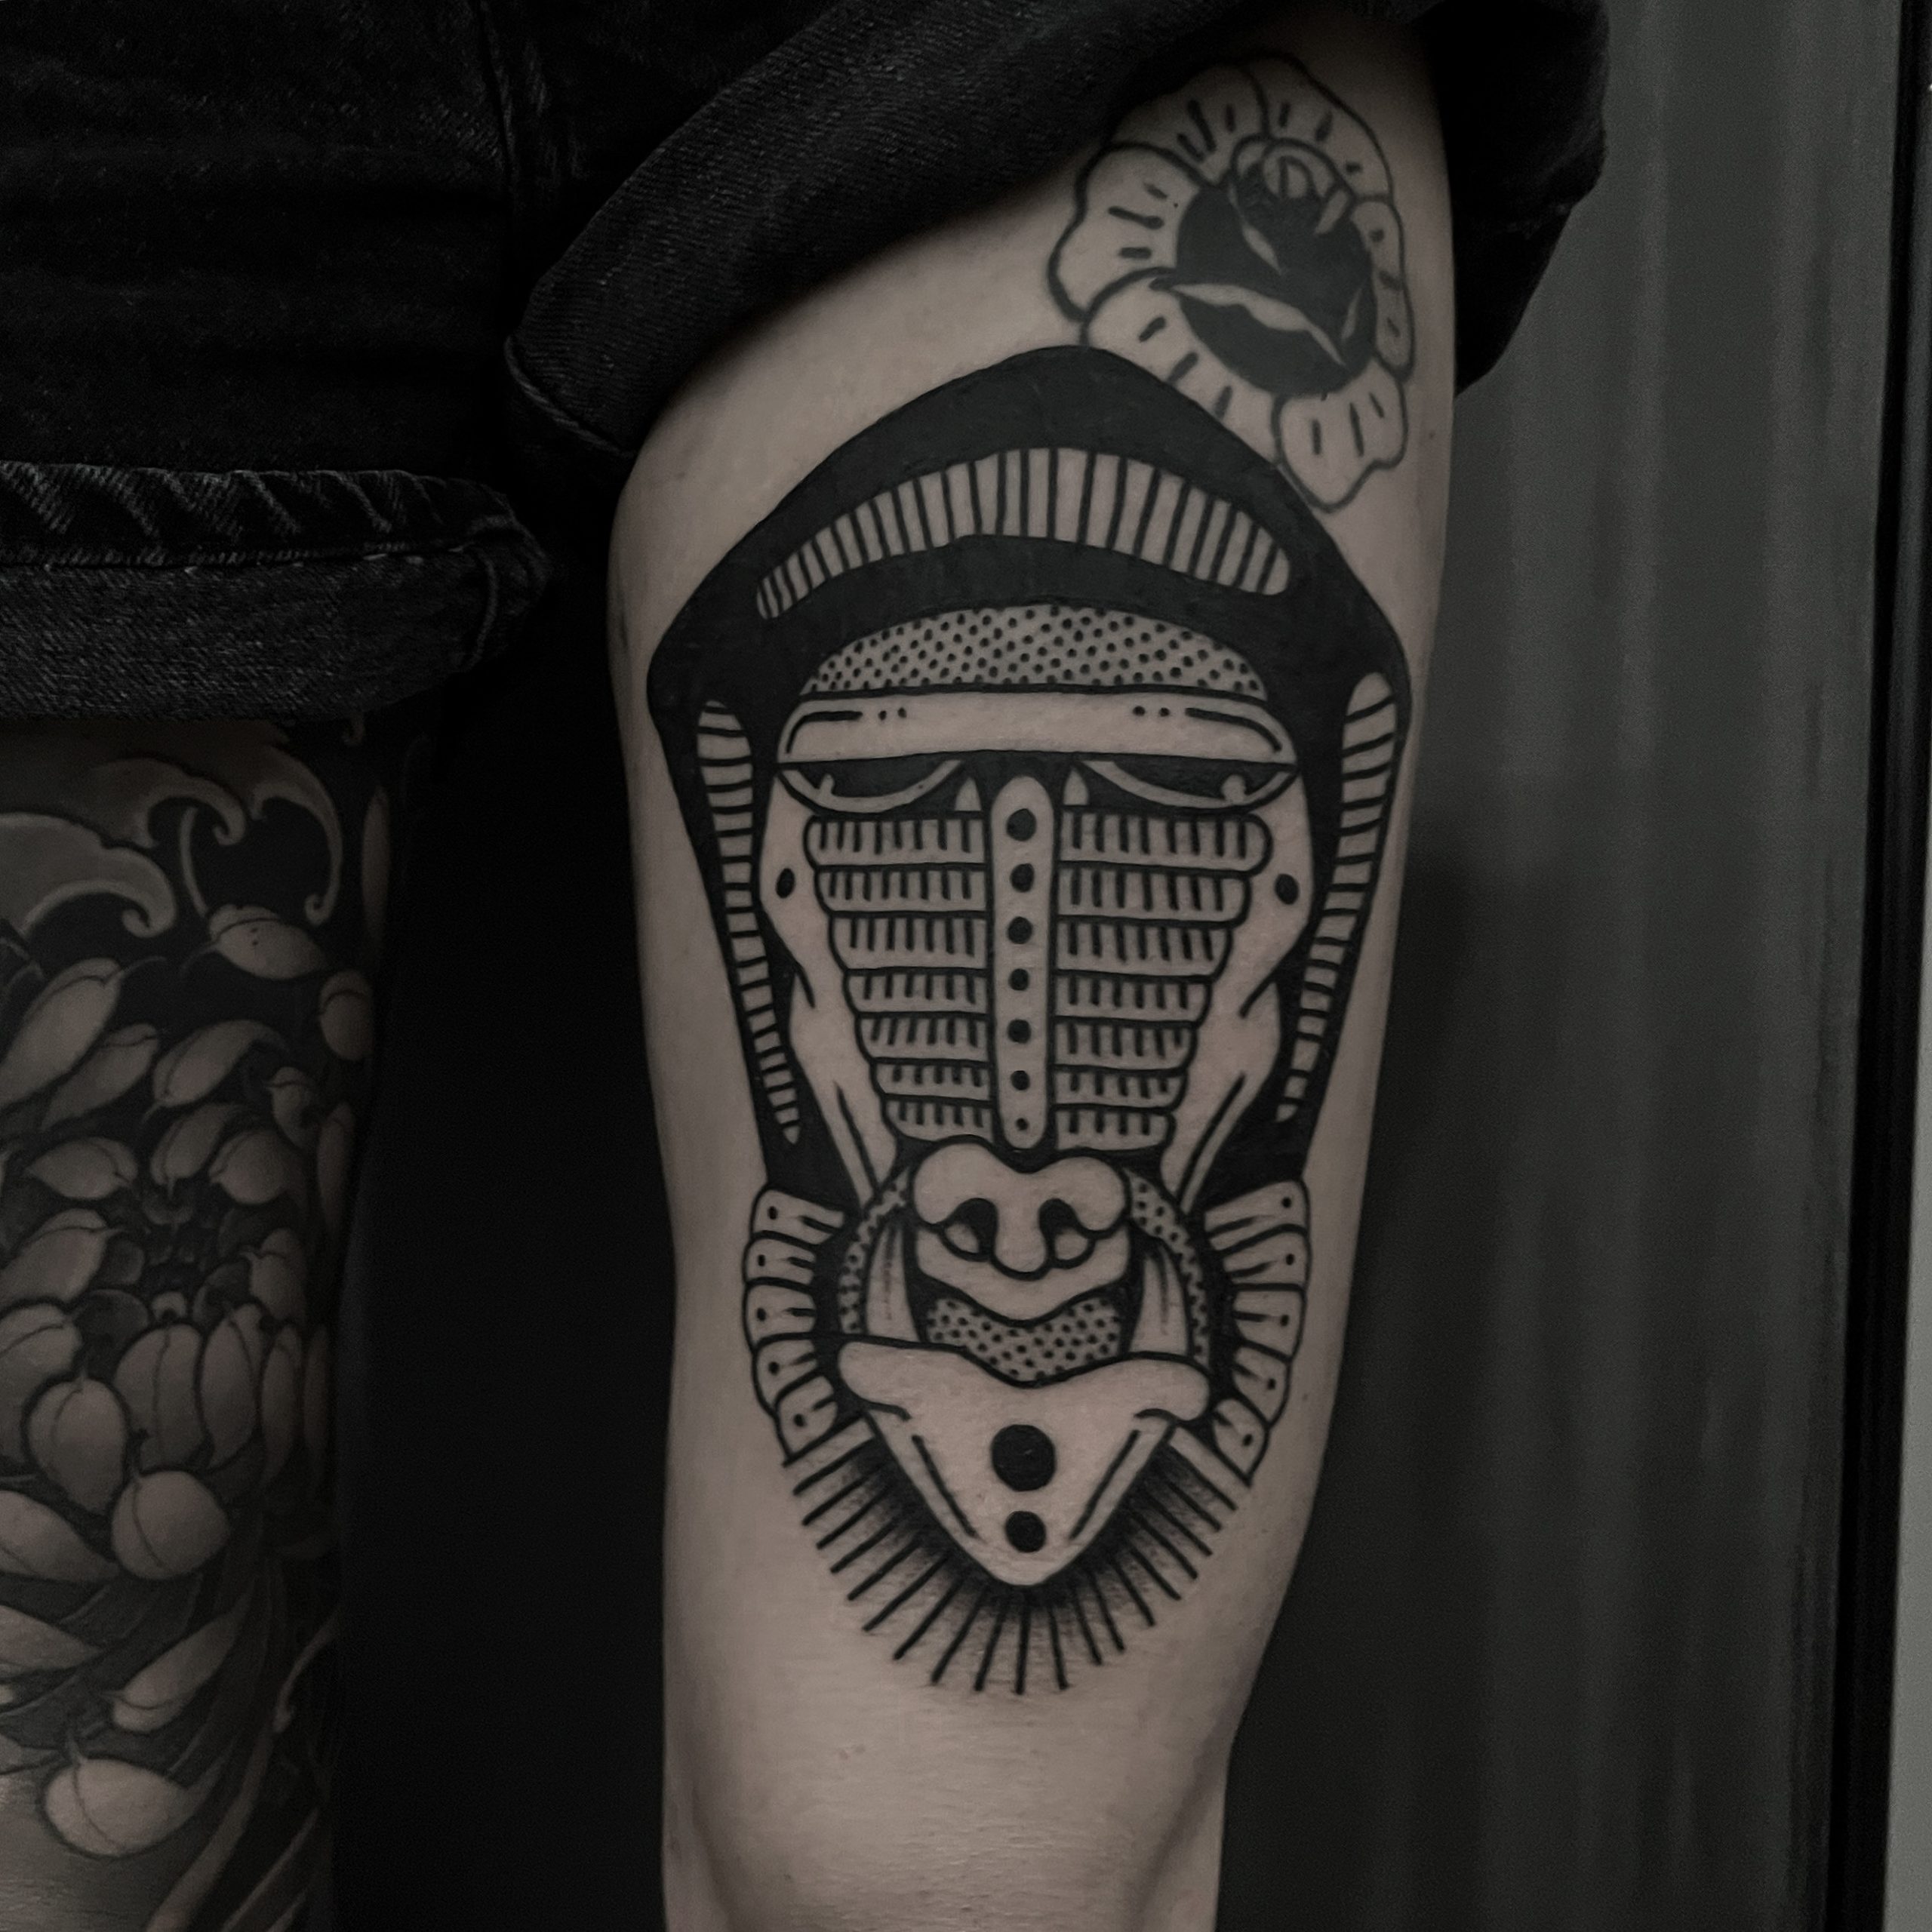 Studio tattoo Monza